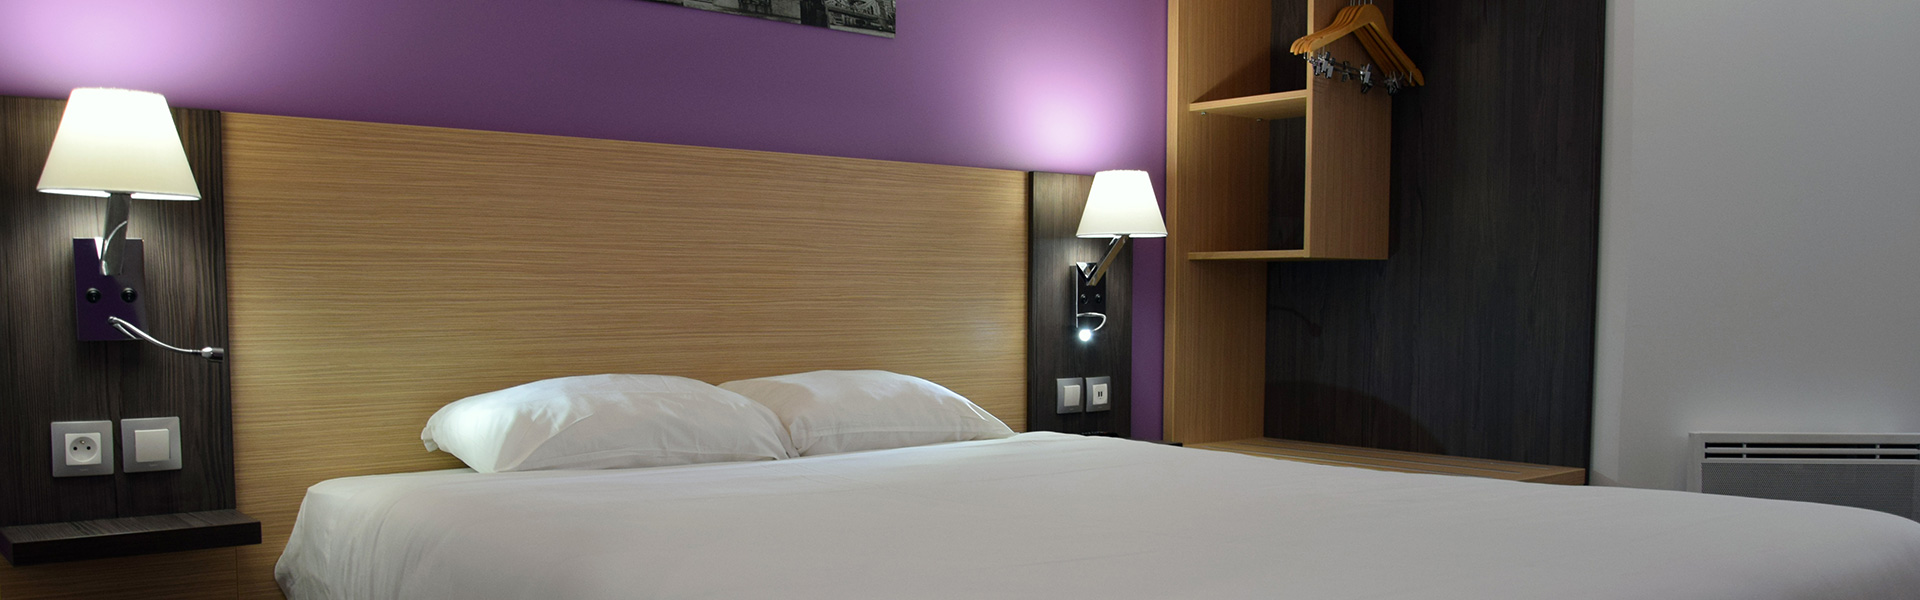 hotel_bleu_france_chambre_violet_1920x600